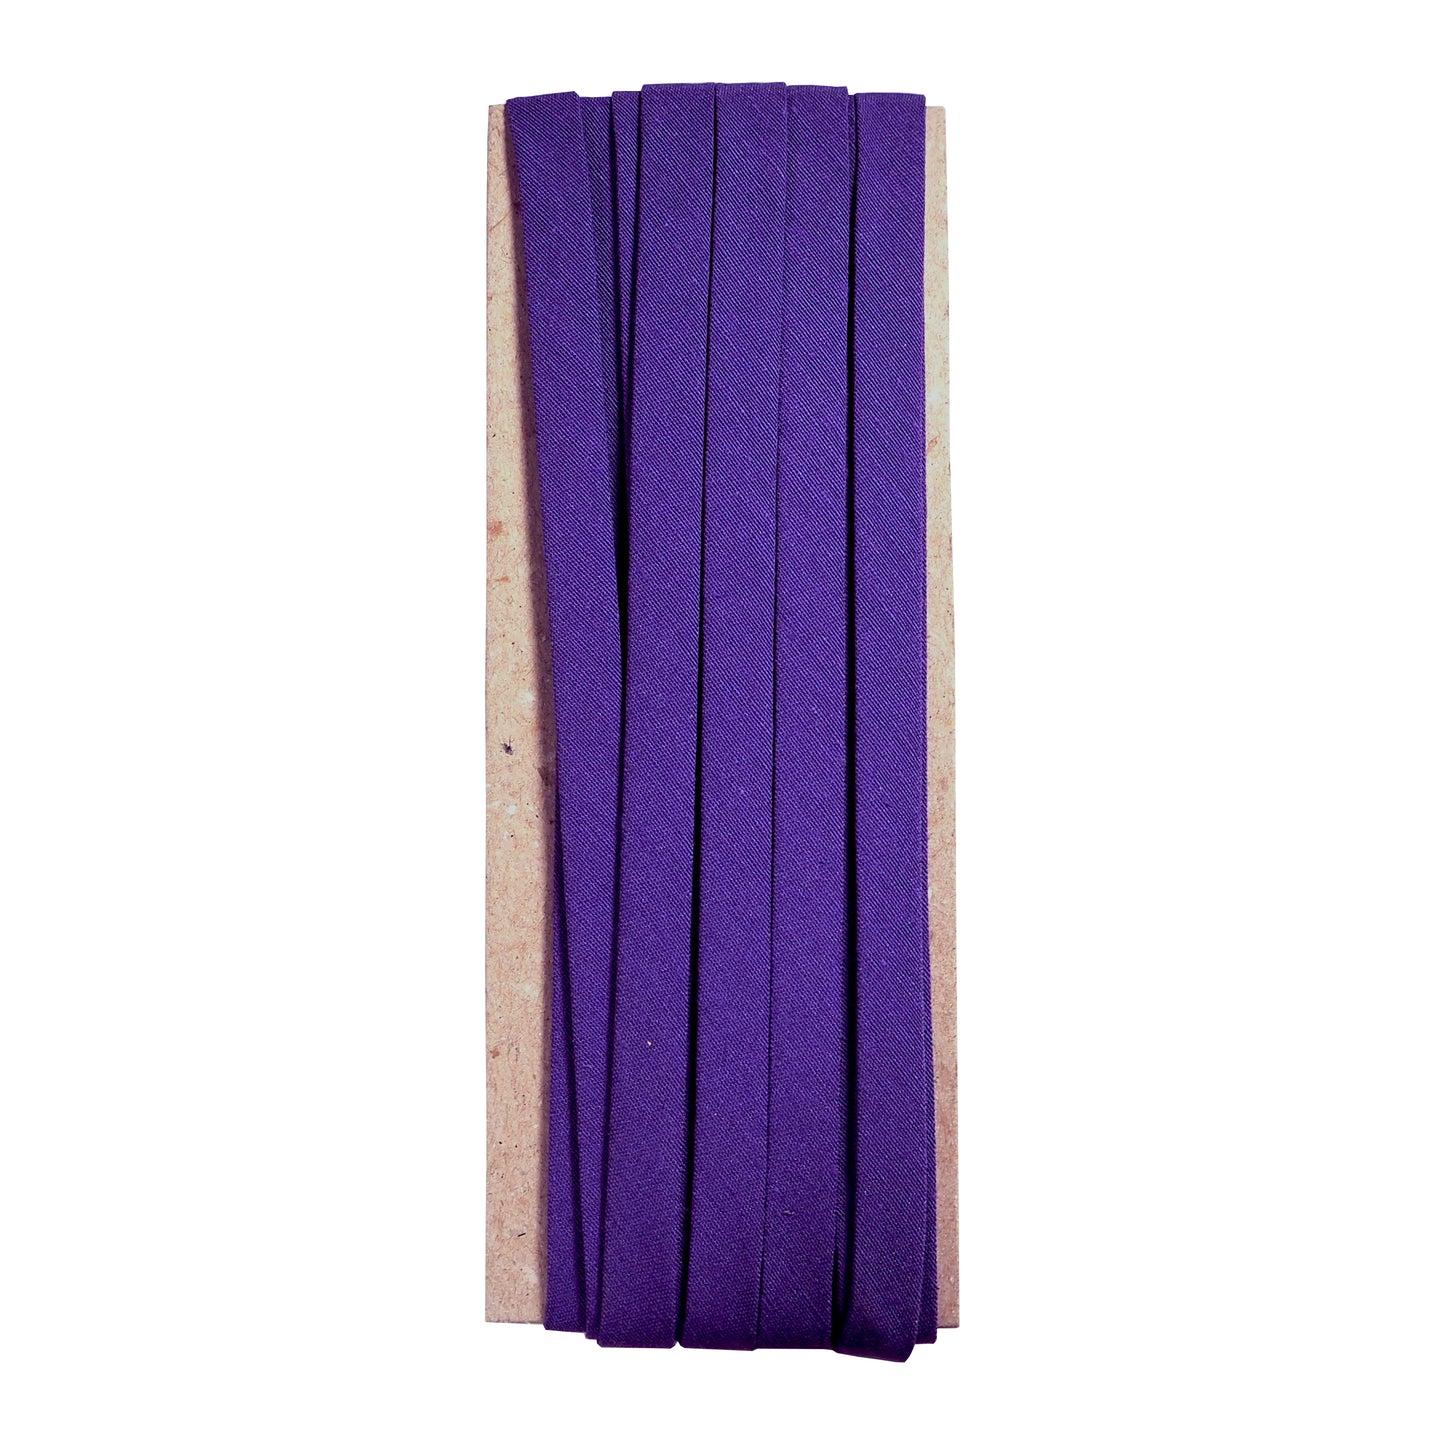 double fold cotton bias binding tape 10mm- 3/8inch (5yds) 5 yards / purple